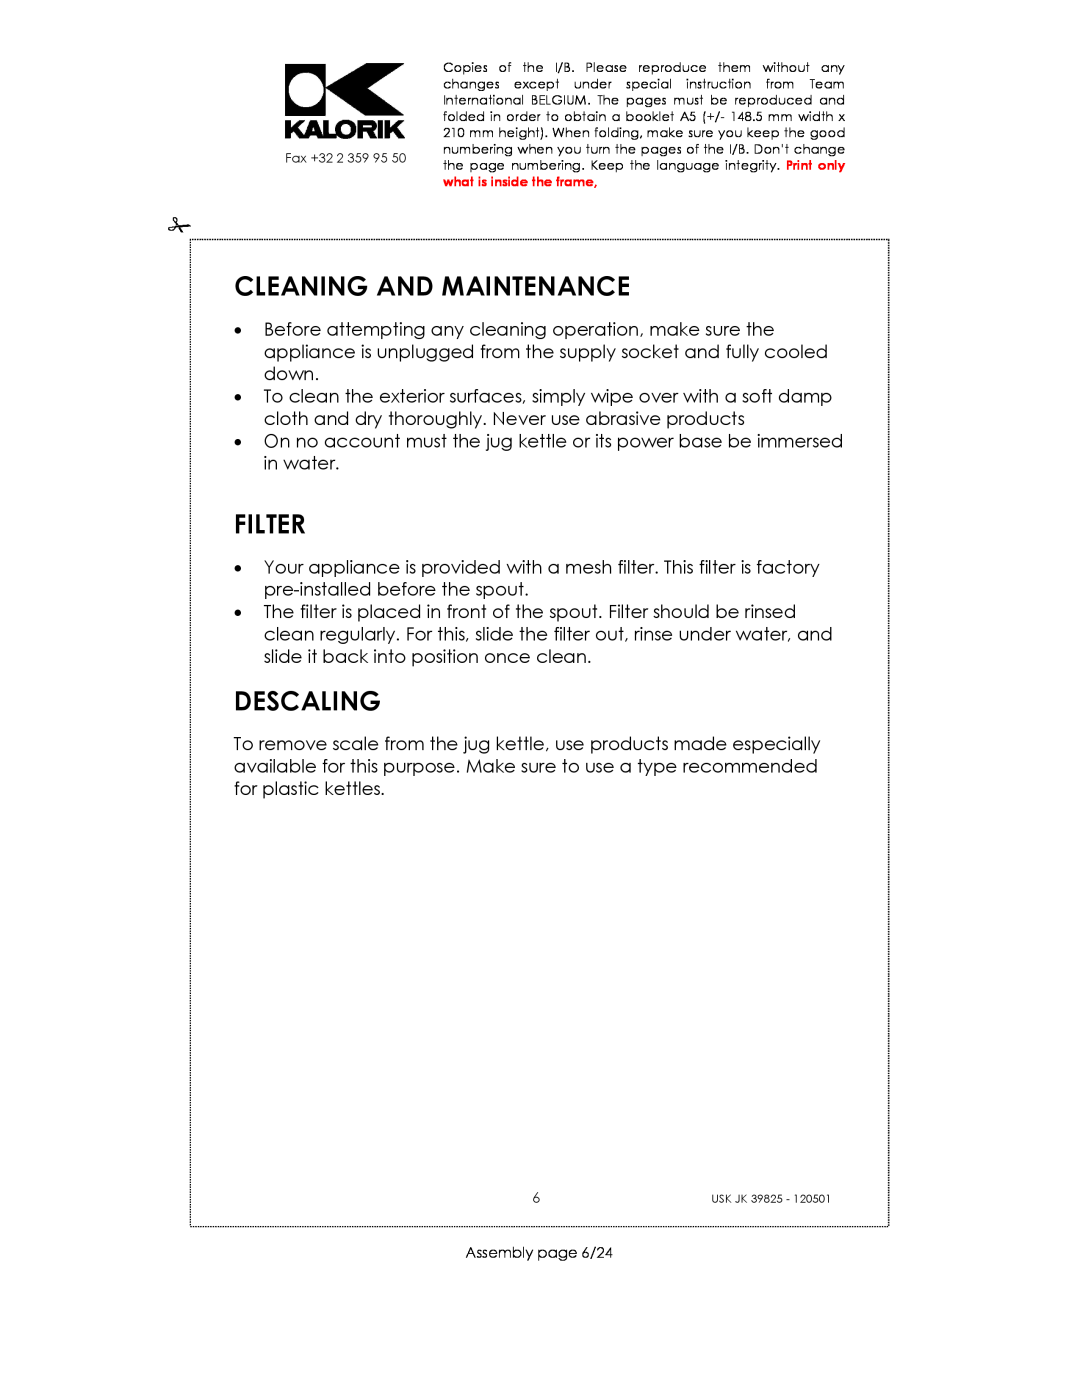 Kalorik JK 39825 manual Cleaning And Maintenance, Filter, Descaling, Assembly page 6/24 